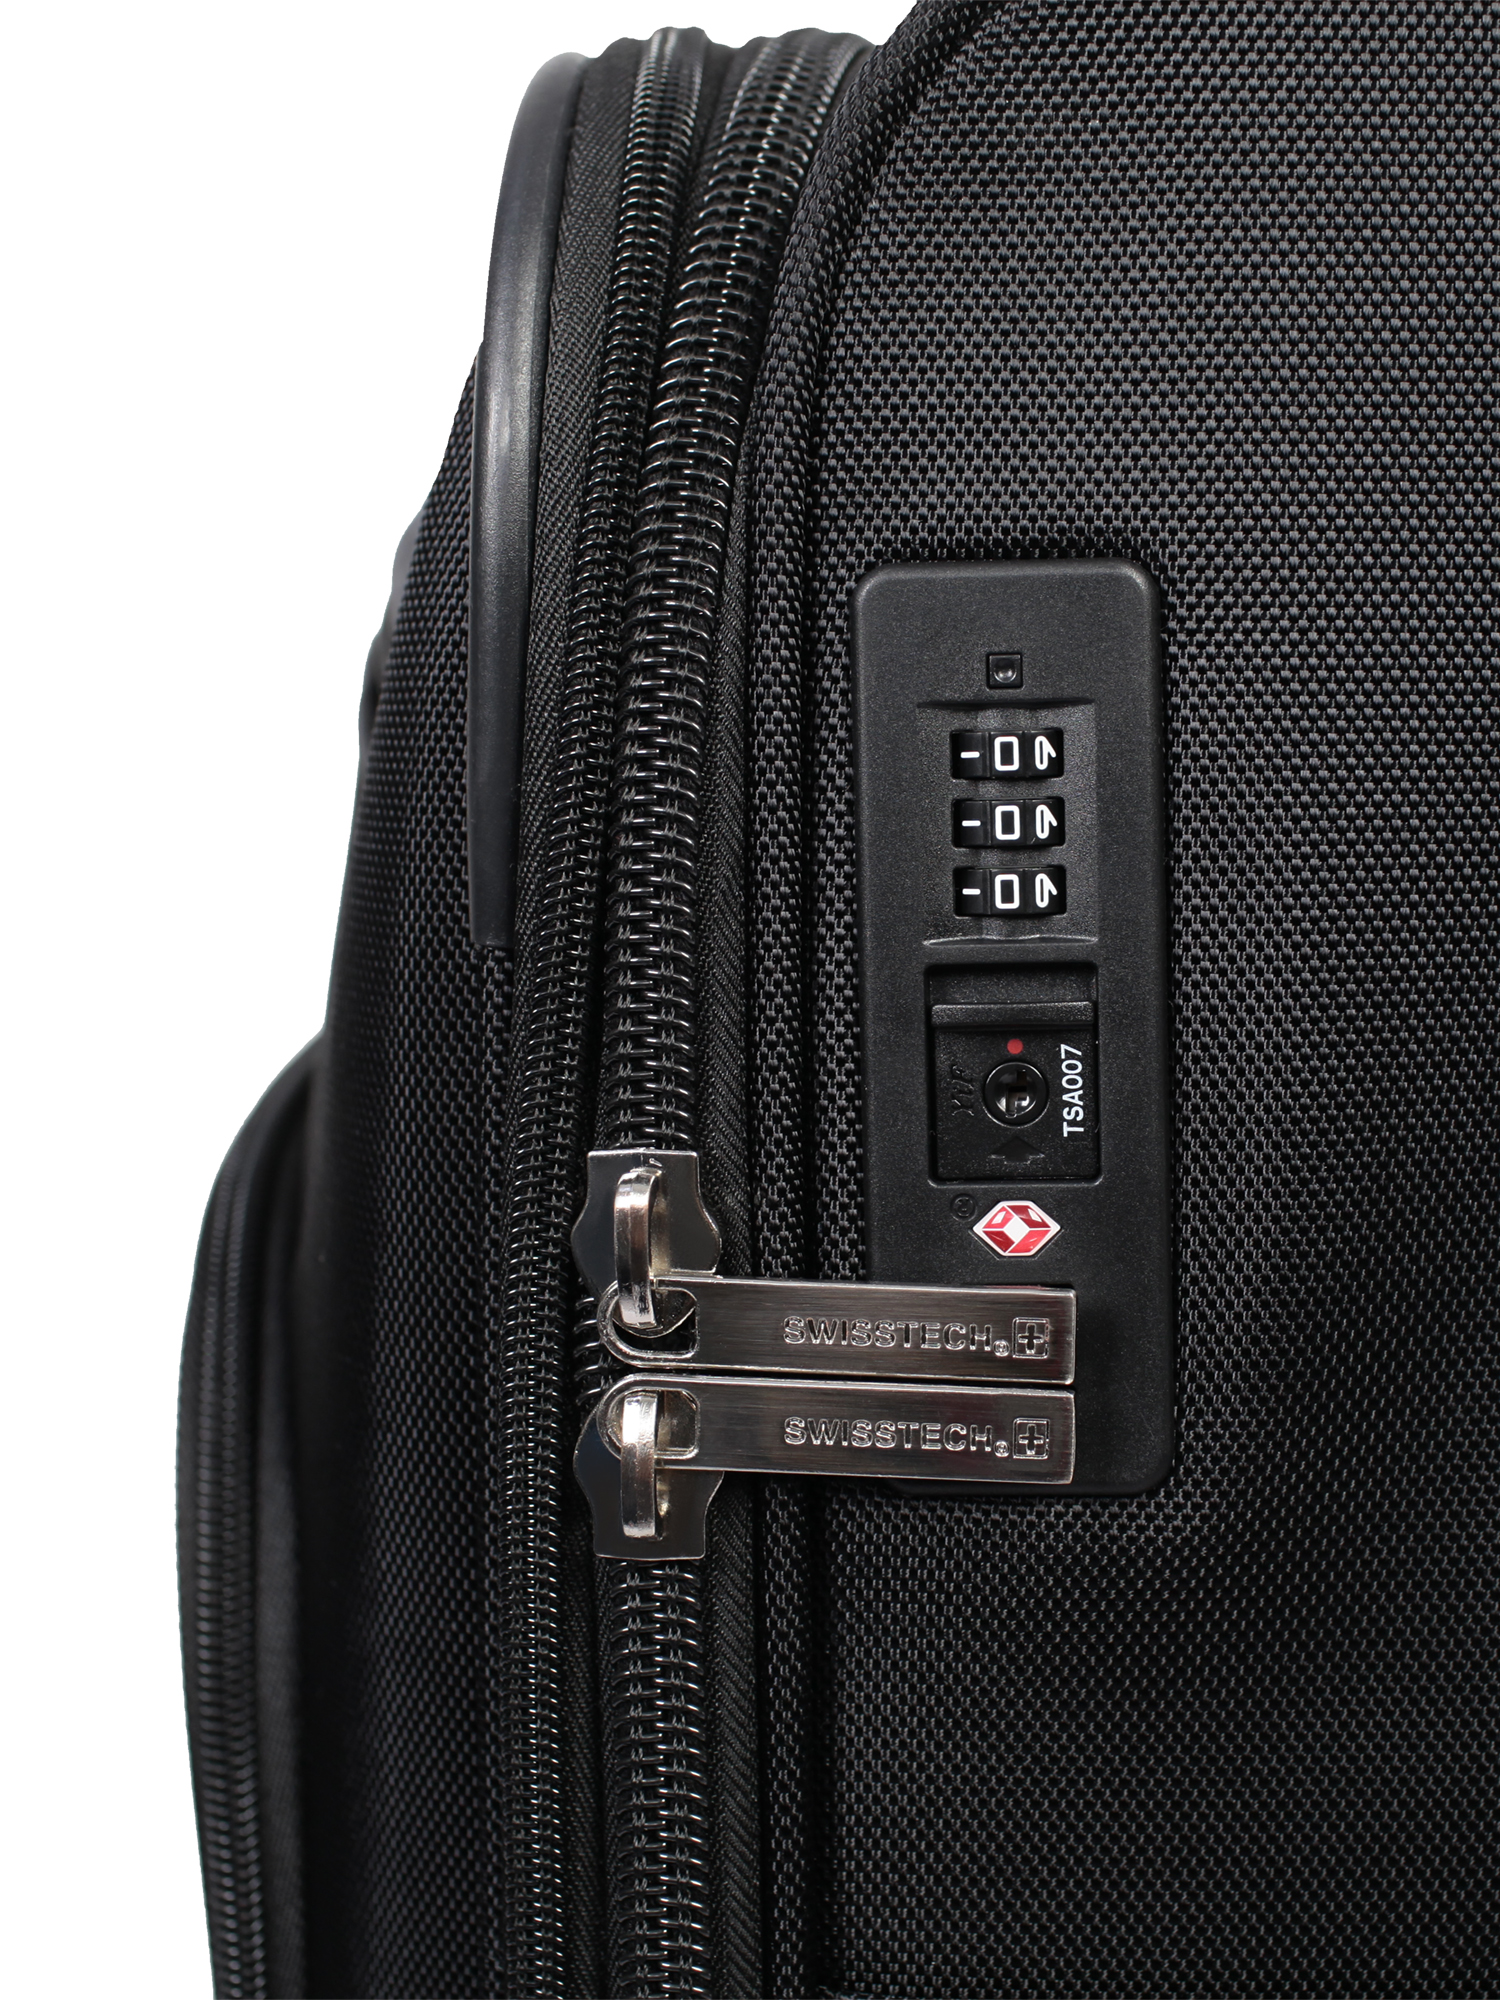 SwissTech Executive 16.5" Carry-on Luggage, 8-Wheel Underseater, Black (Walmart Exclusive) - image 4 of 9